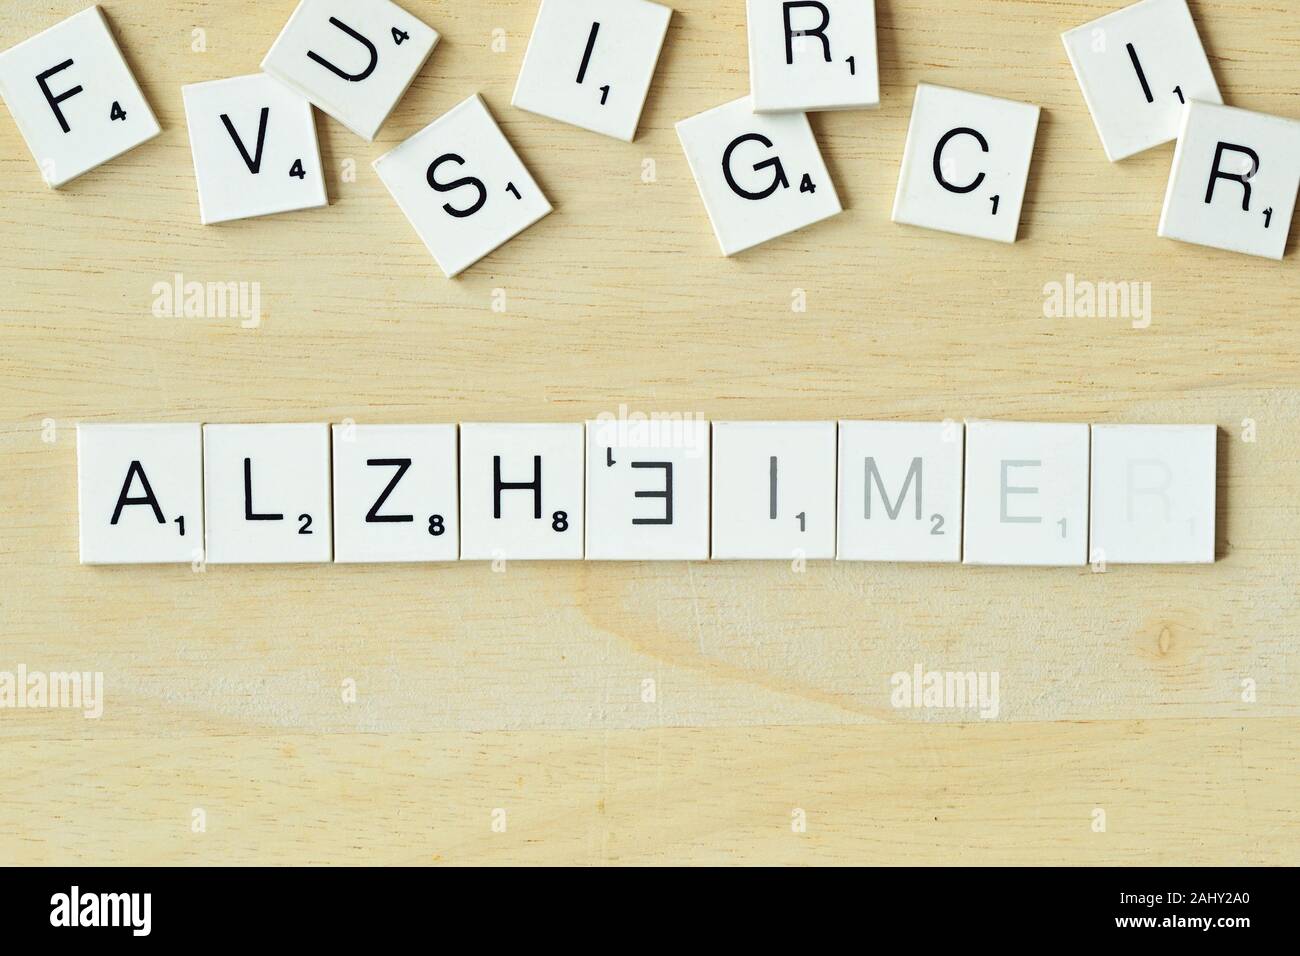 La palabra Alzheimer escrito con letras de Scrabble - Concepto de fading recuerdos Foto de stock